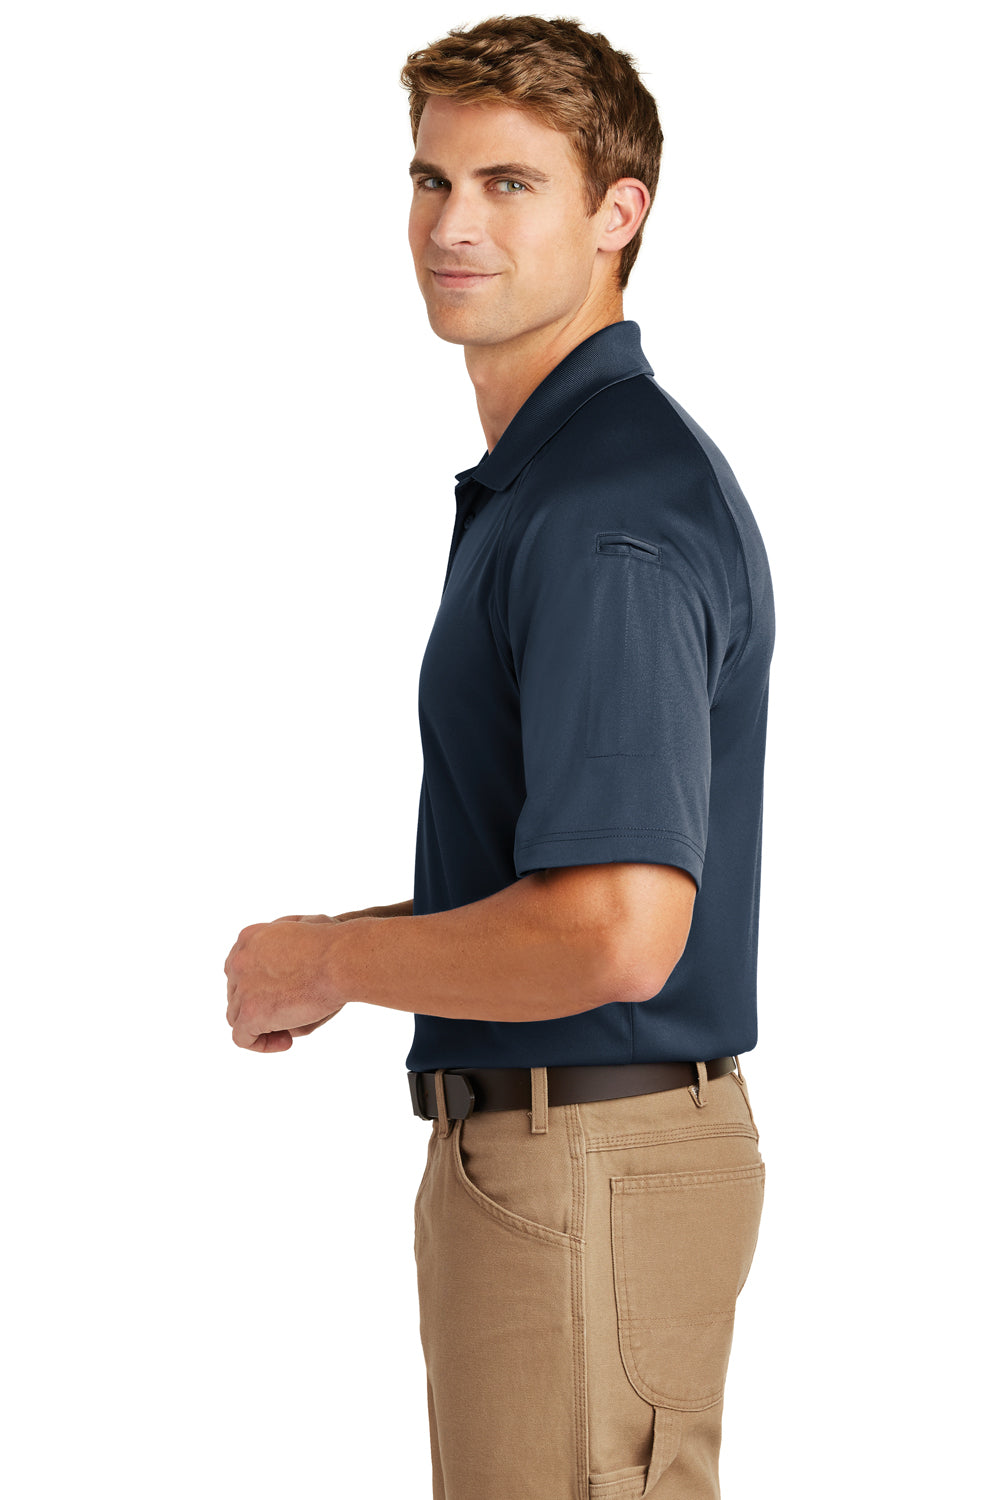 CornerStone CS410 Mens Select Tactical Moisture Wicking Short Sleeve Polo Shirt Navy Blue Side